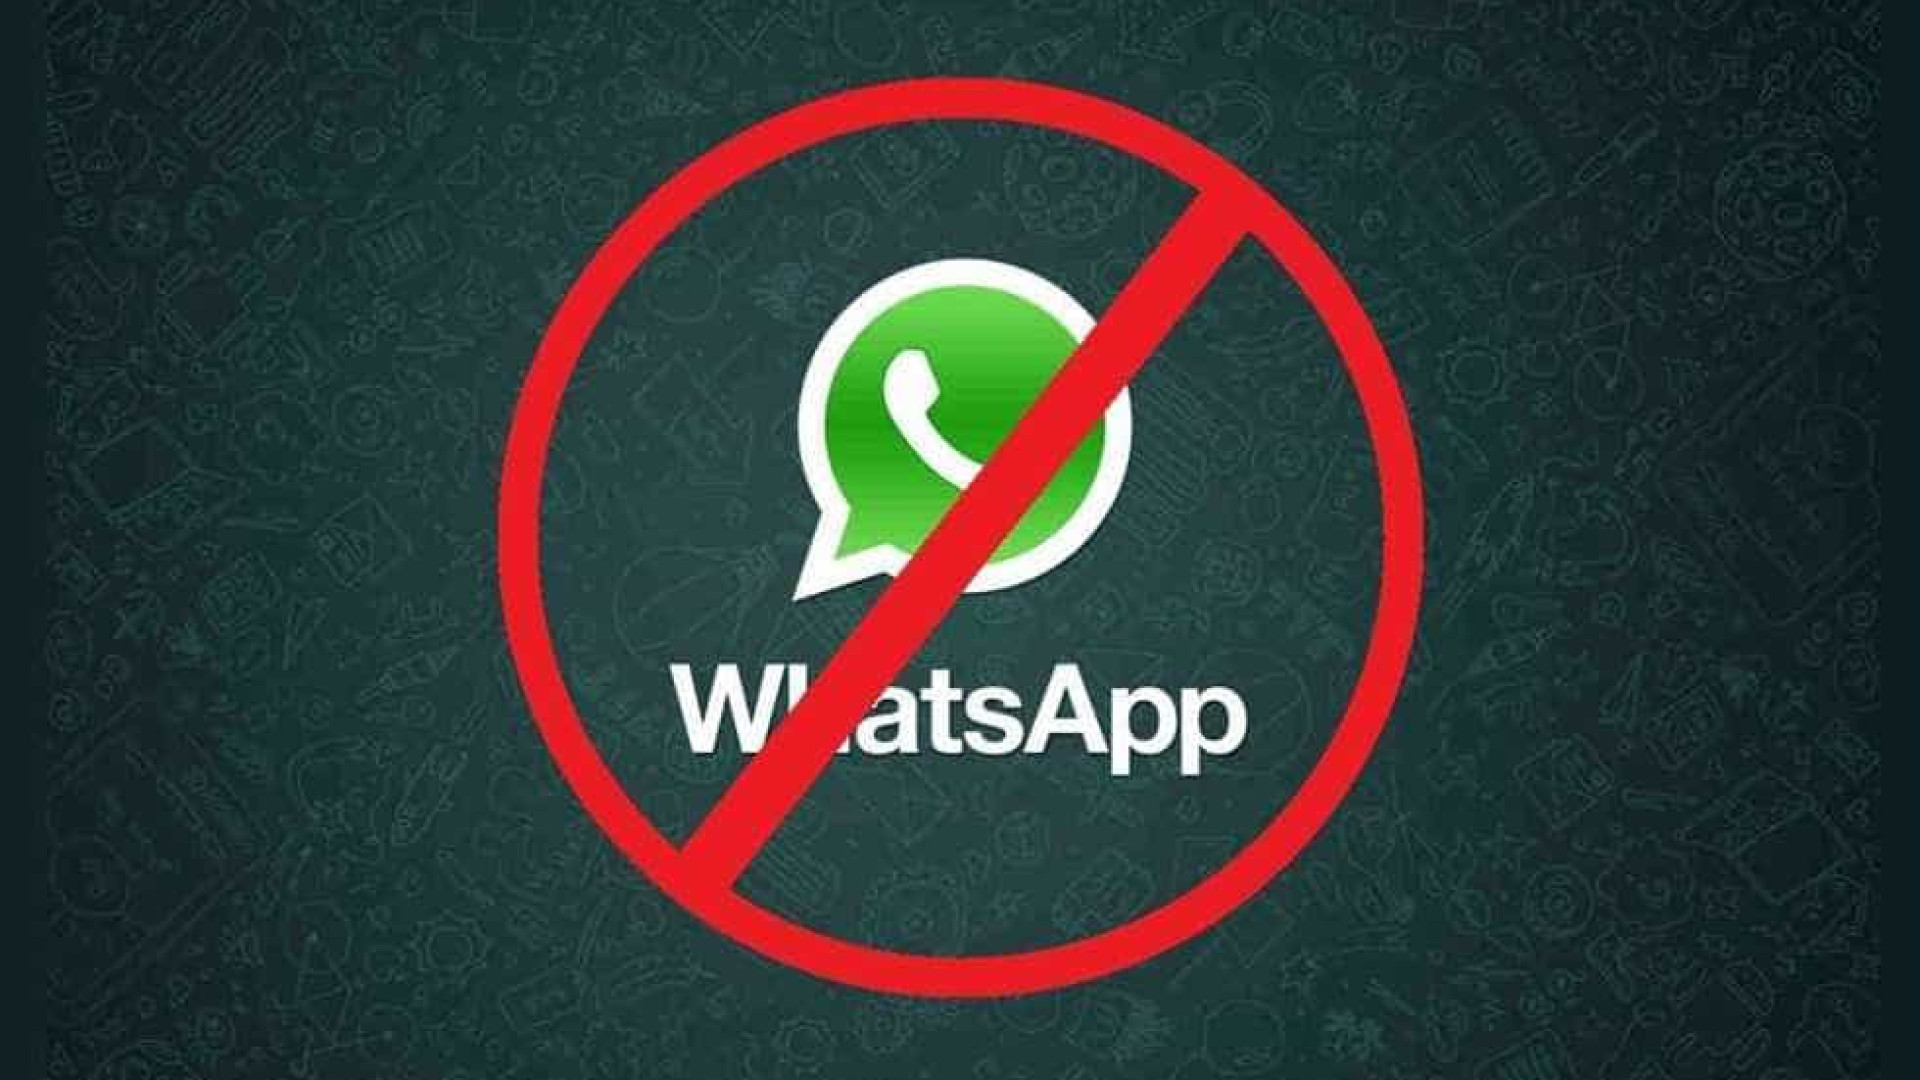 Padre propõe 'jejum' de WhatsApp durante Quaresma